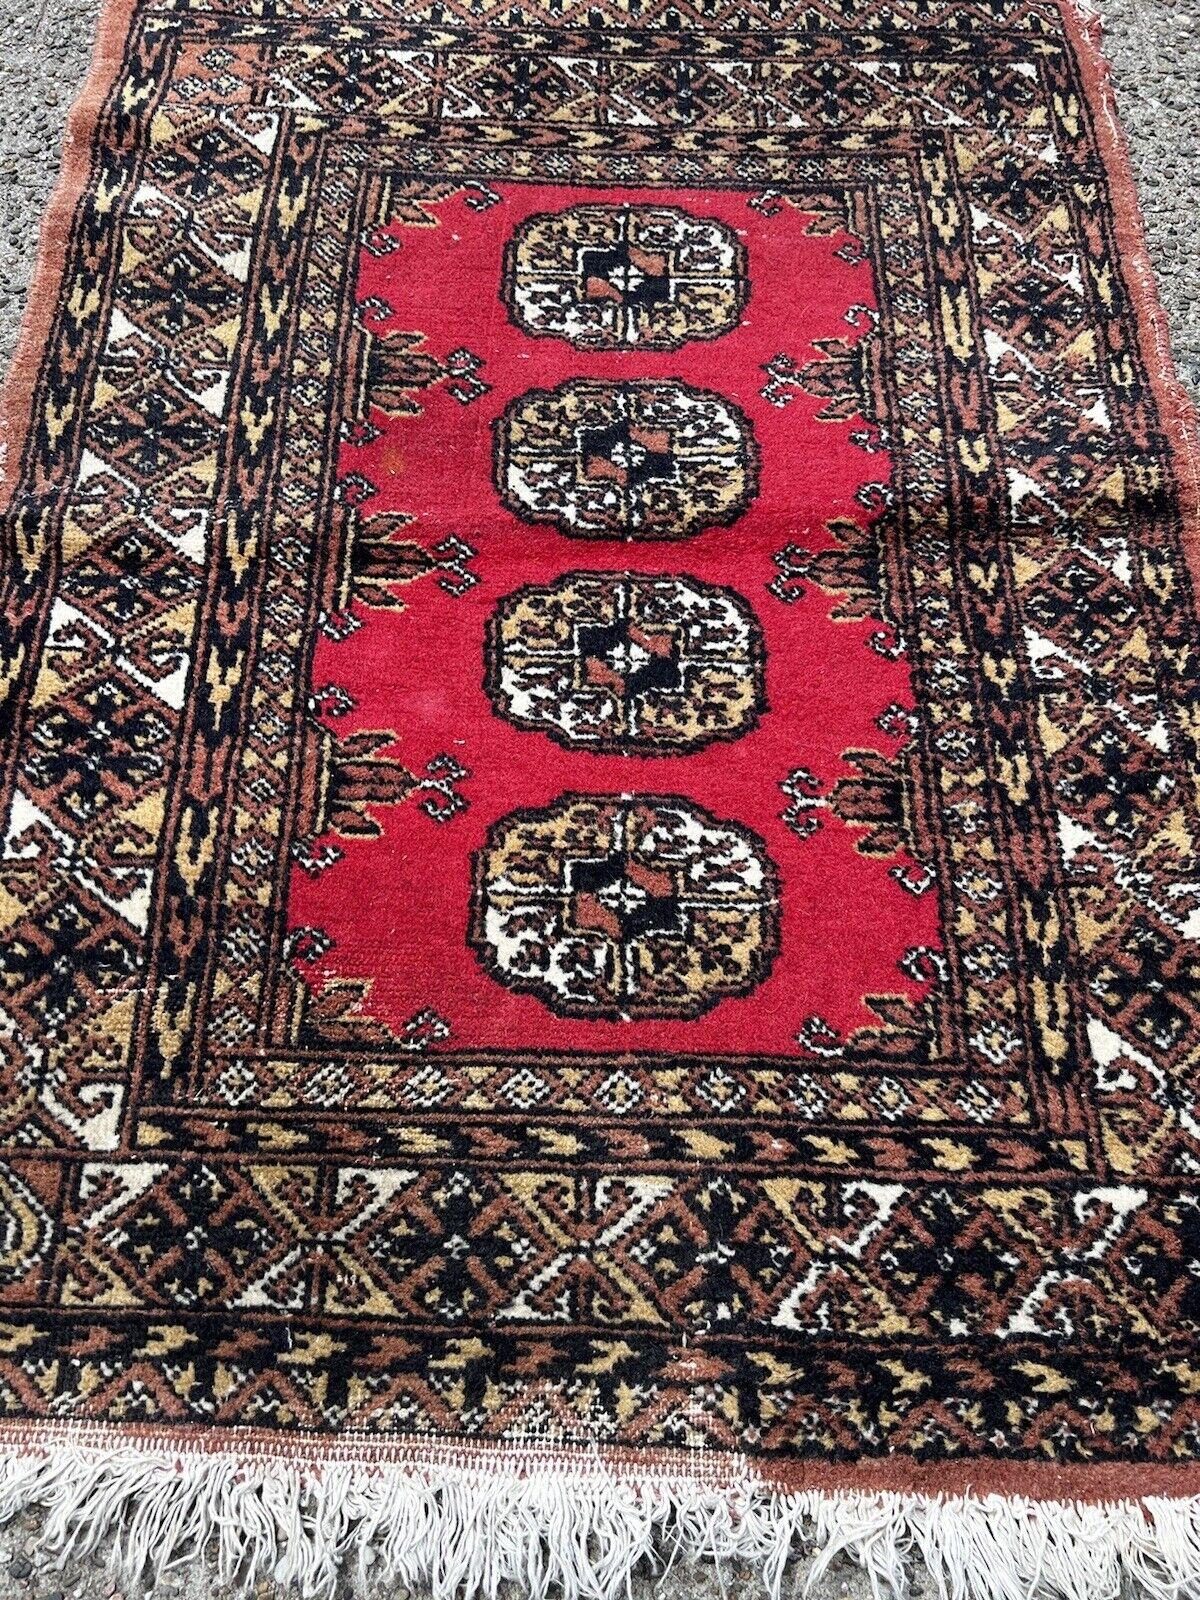 Handmade Vintage Uzbek Bukhara Rug 2.1' x 3', 1960s - 1S25 For Sale 3